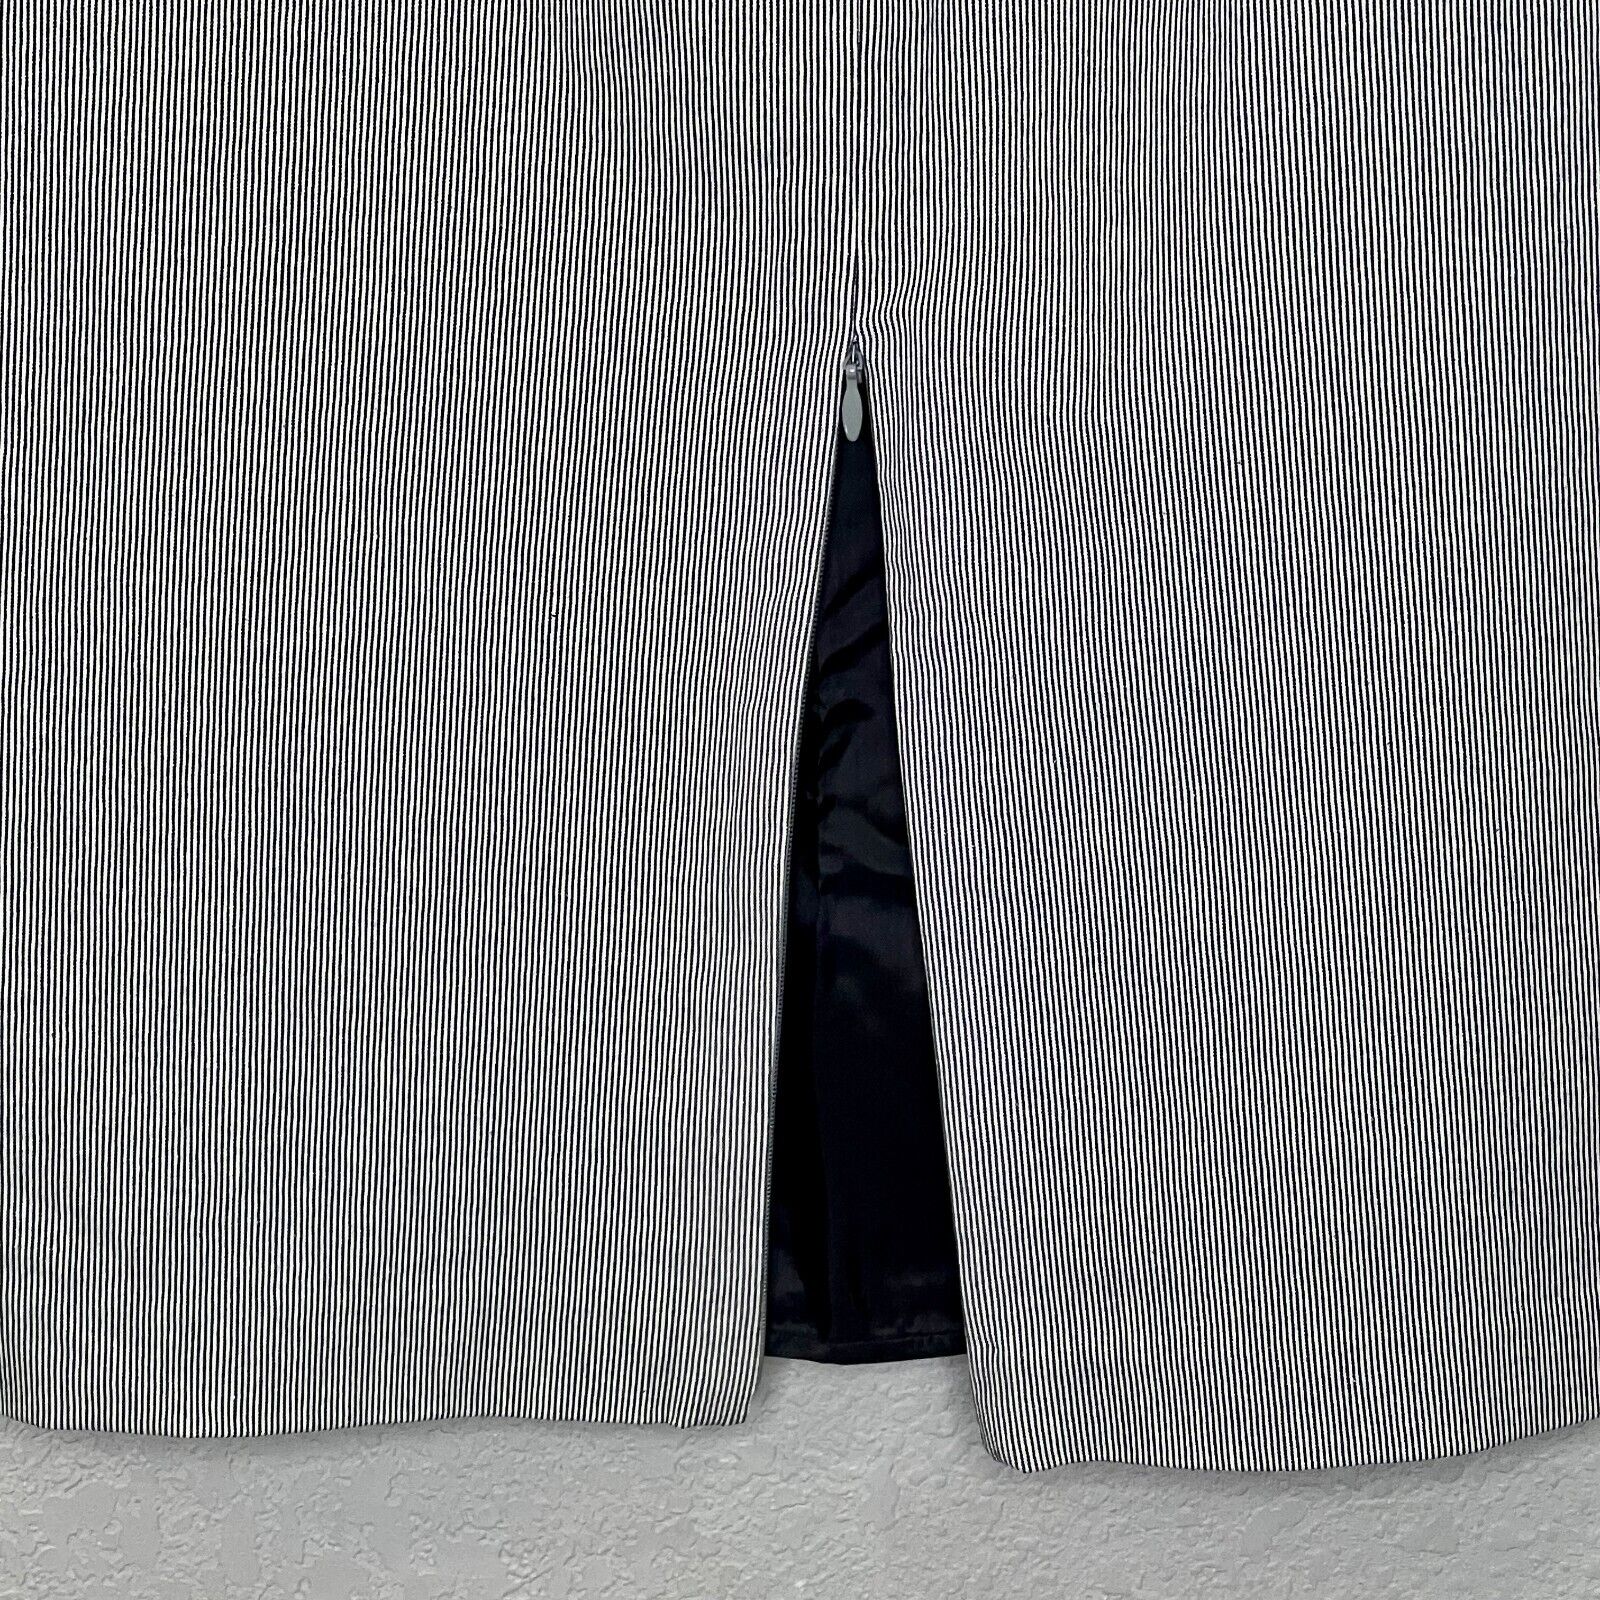 Robert Rodriguez Black Pin Striped Buckle Pencil Skirt Size 8 NEW